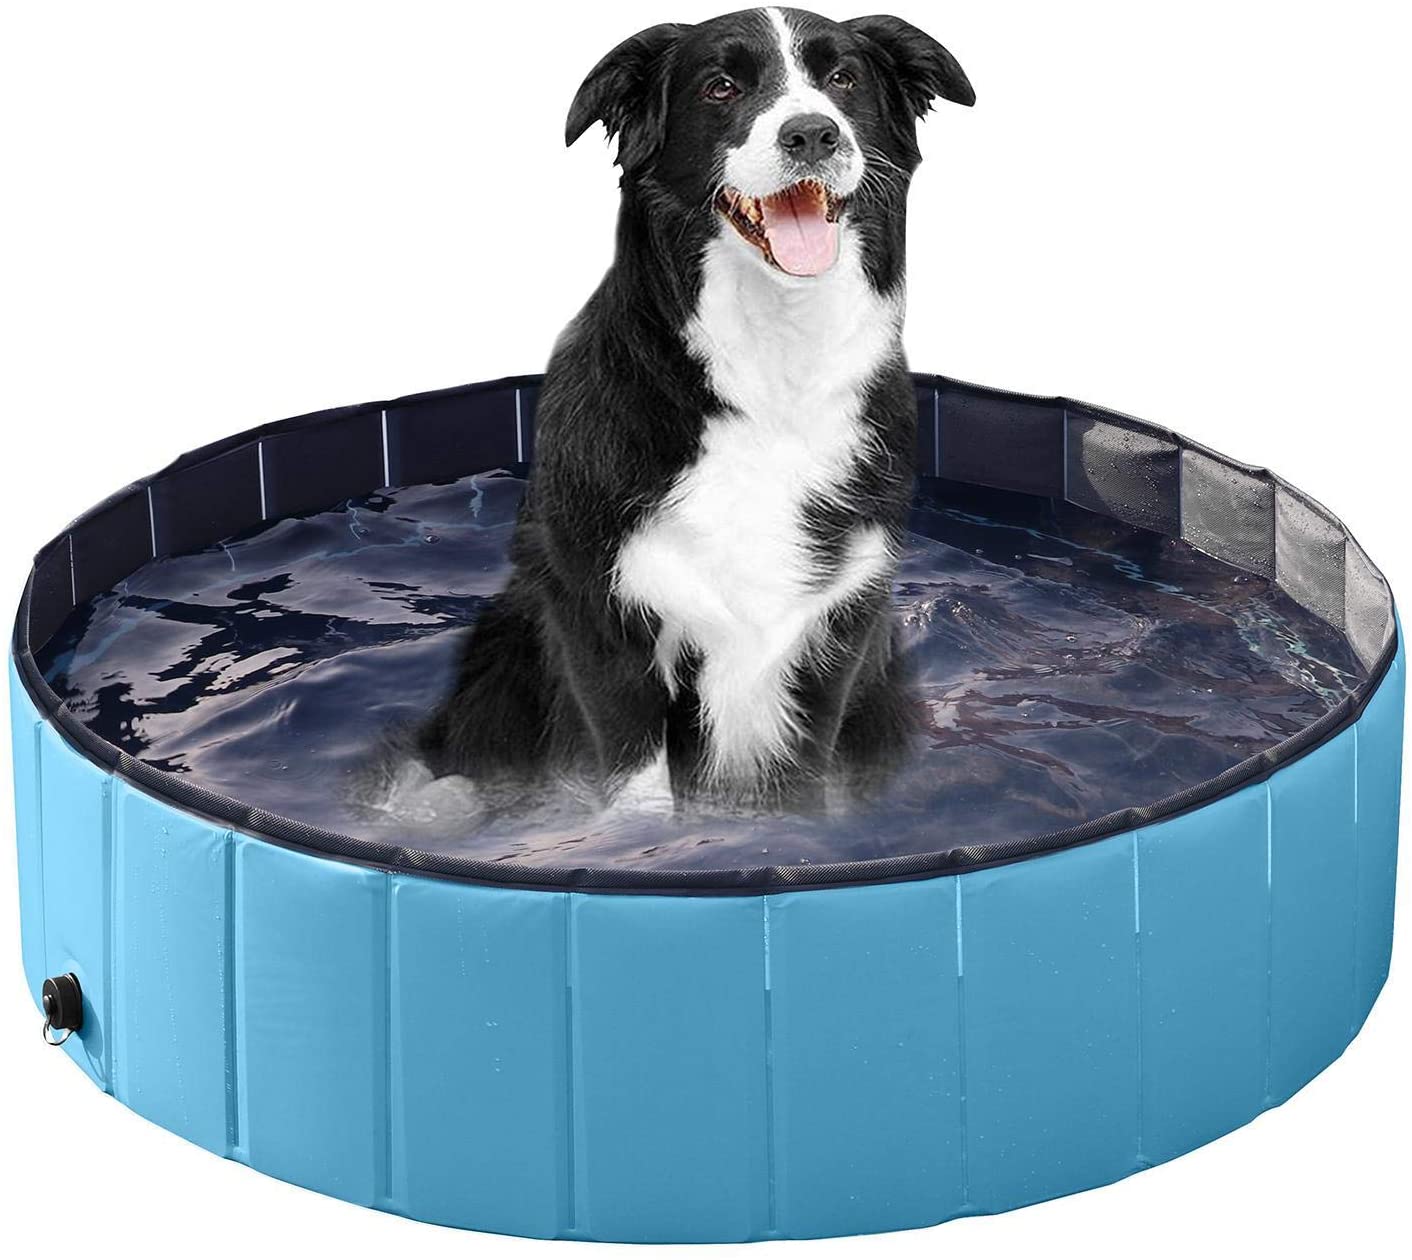  JJOBS Piscina para Perro Bañera Plegable para Perros Gatos Mascotas, Natacion al Aire Libre, Material de PVC-Azul (S: 80 * 20cm) 